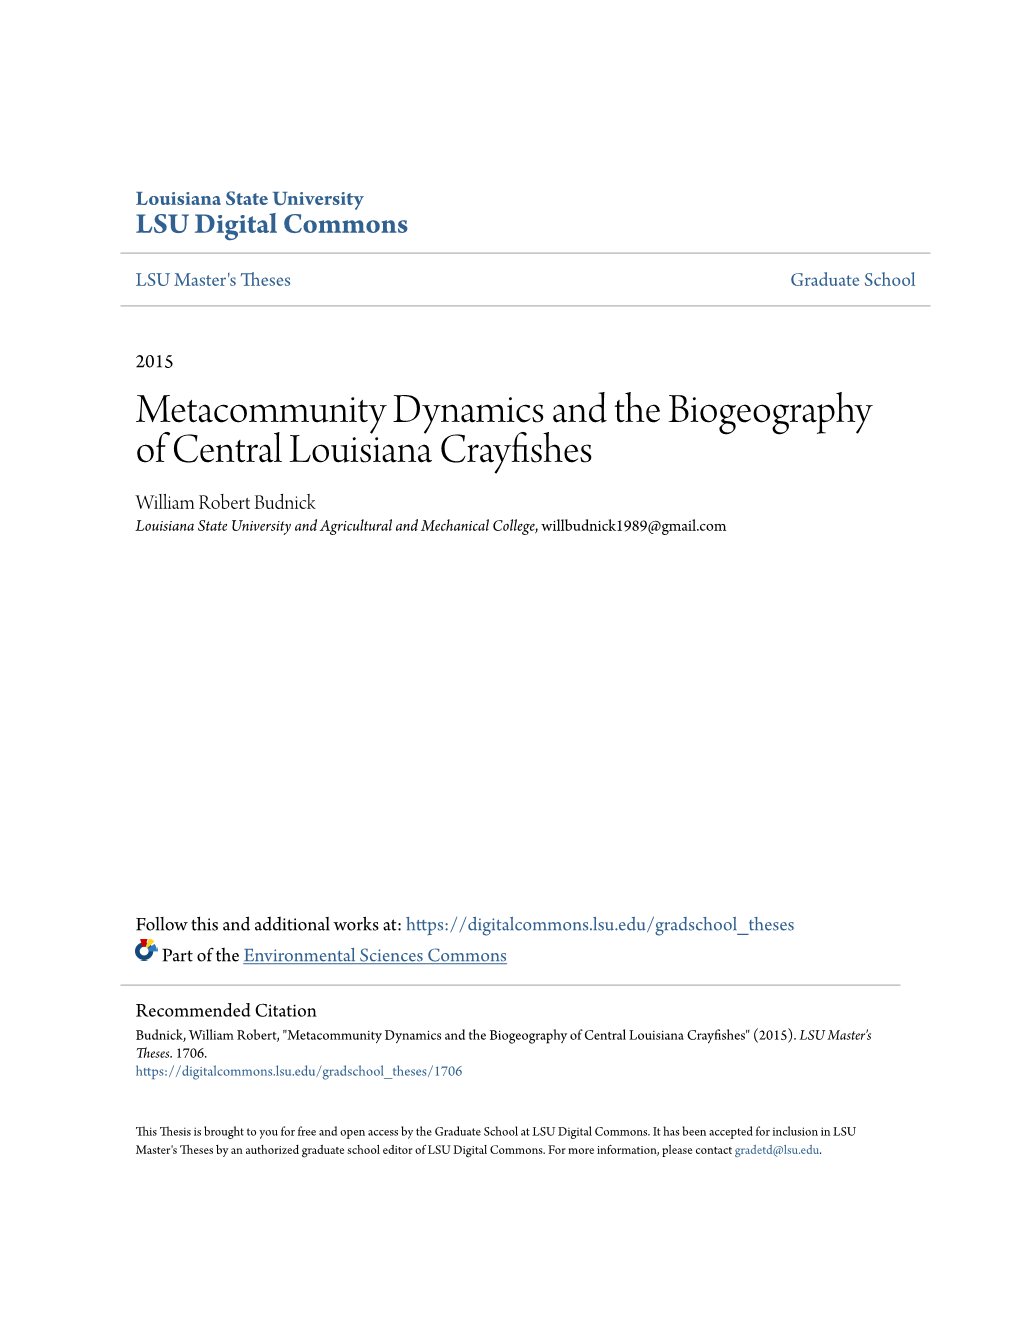 Metacommunity Dynamics and the Biogeography of Central Louisiana